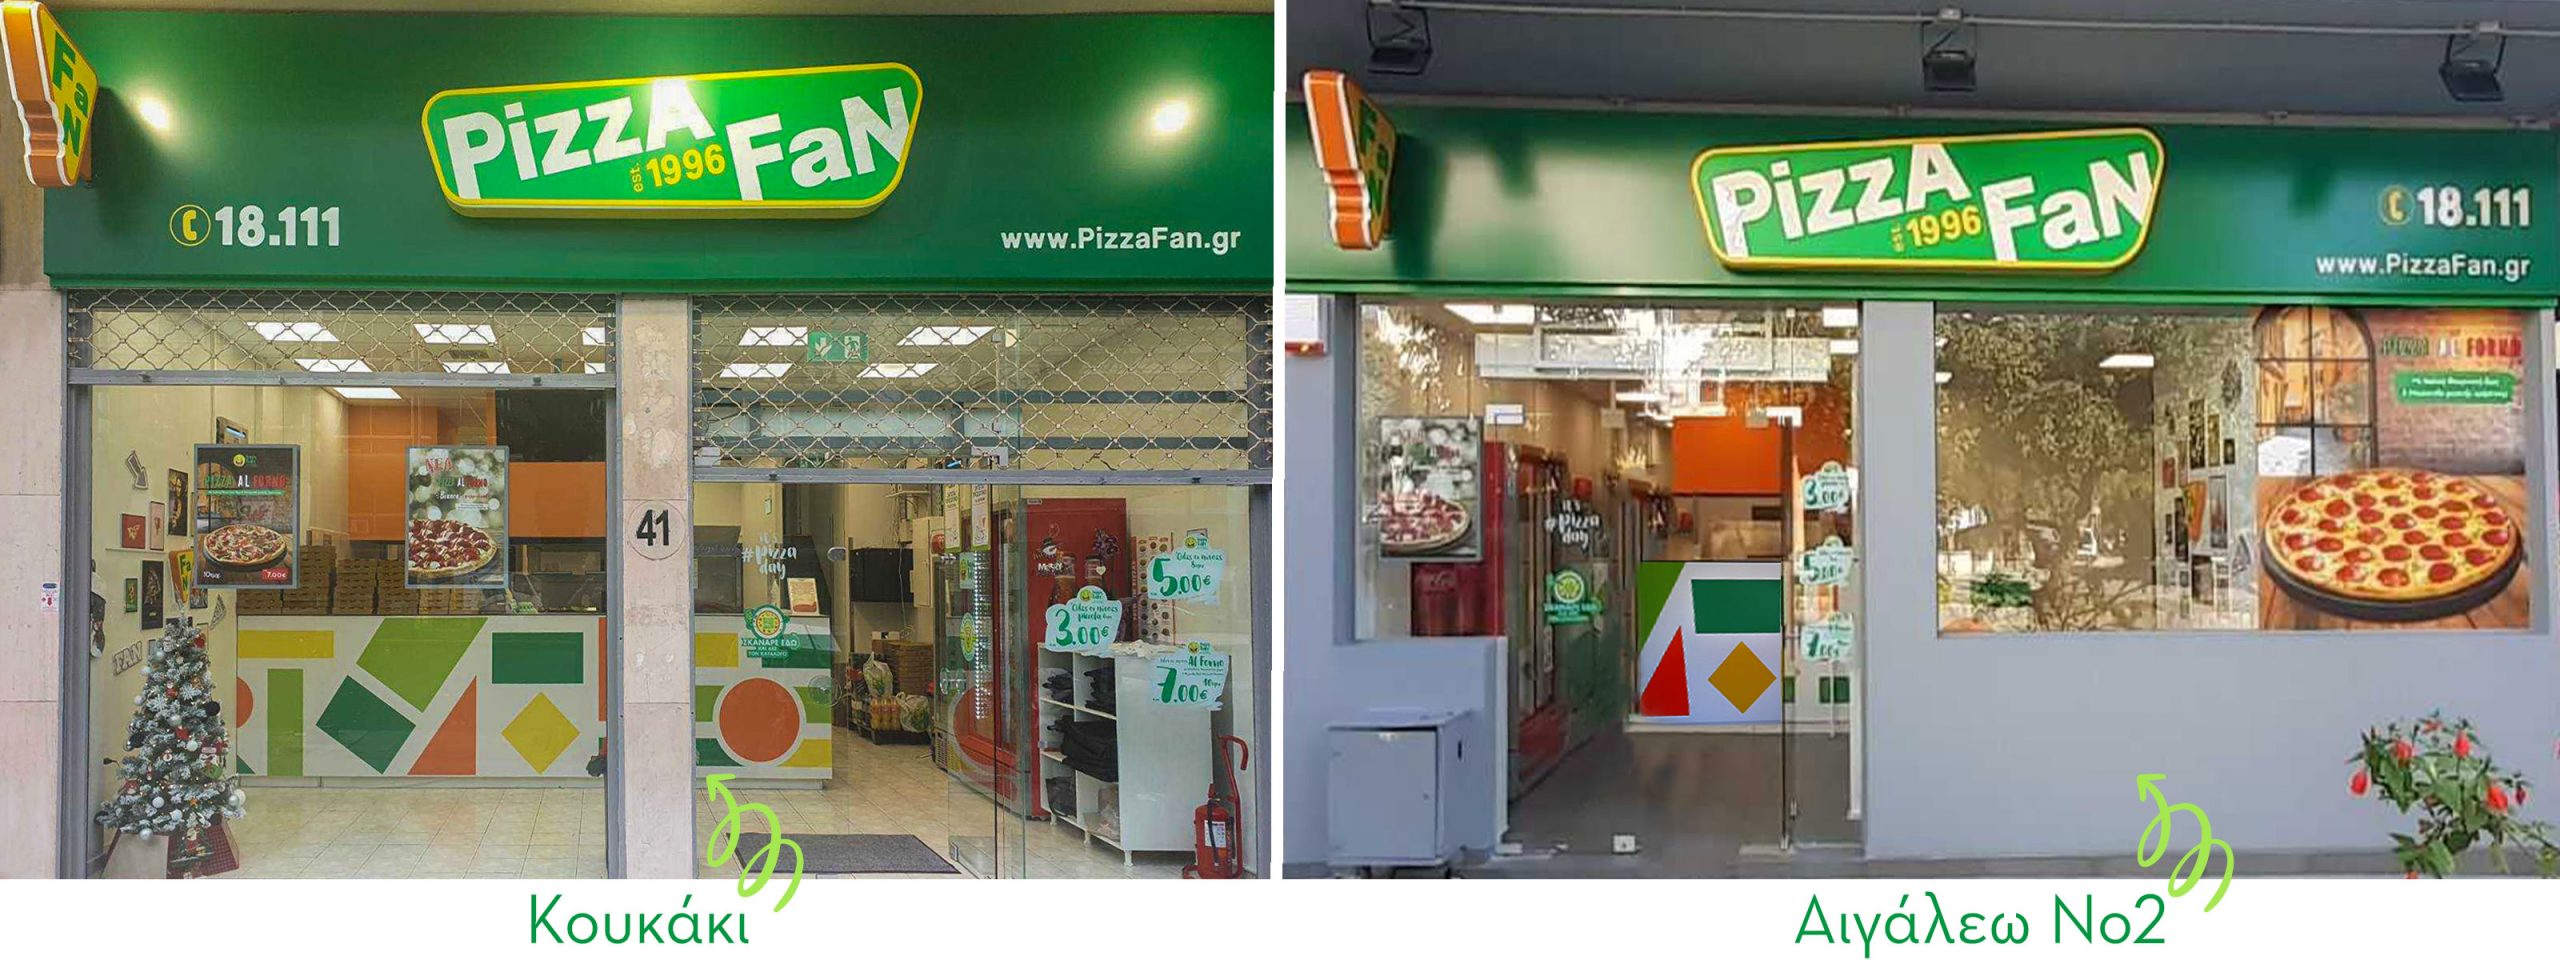 Pizza Fan: Νέα καταστήματα σε Κουκάκι και Αιγάλεω